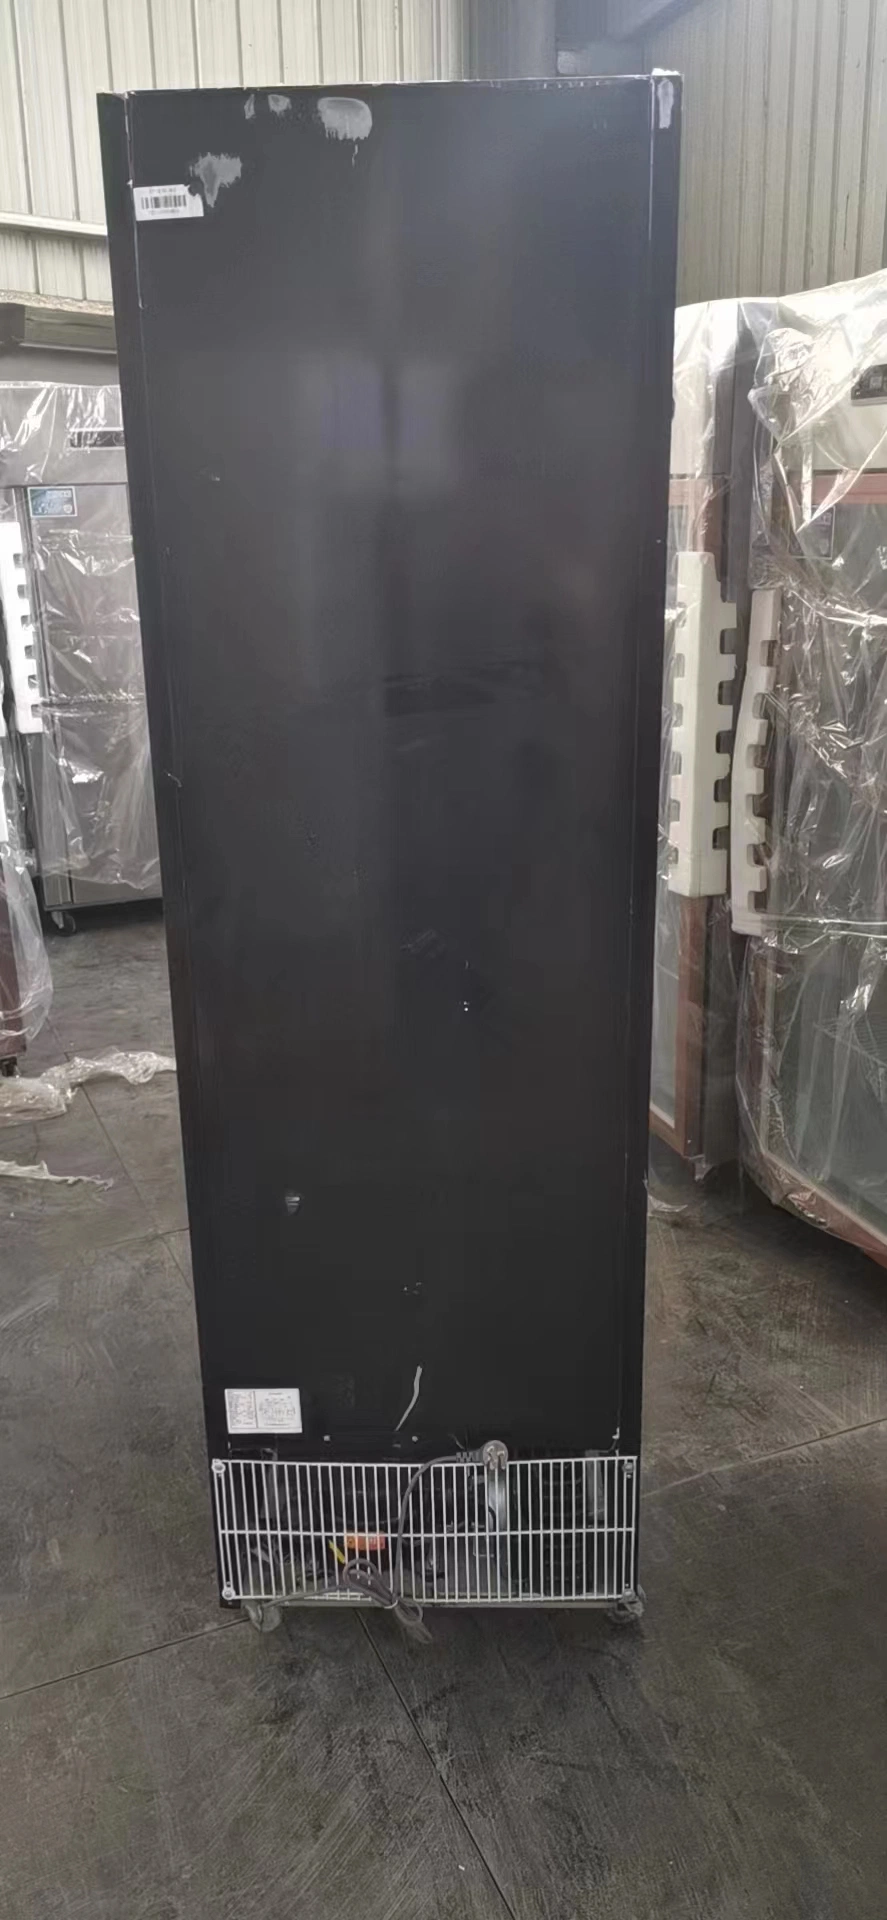 Grt-dB-420fb Commercial Single Glass Door Vertical Showcase Upright Beverage Refrigerator Freezer Cooler